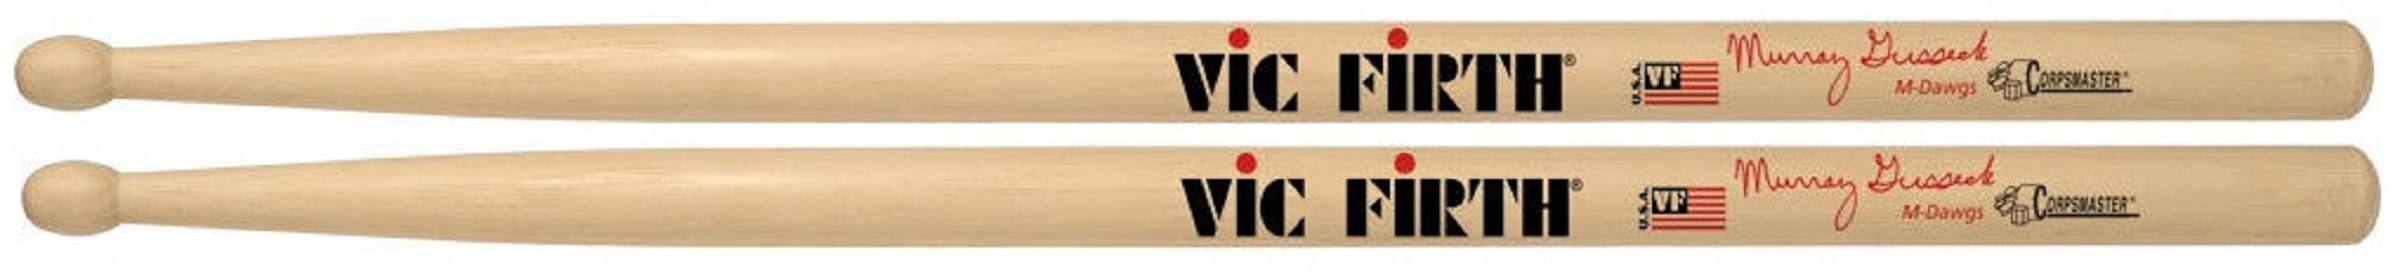 Vic Firth VFSMG Sticks Corpmaster Murray Gussek (Snare Stick)